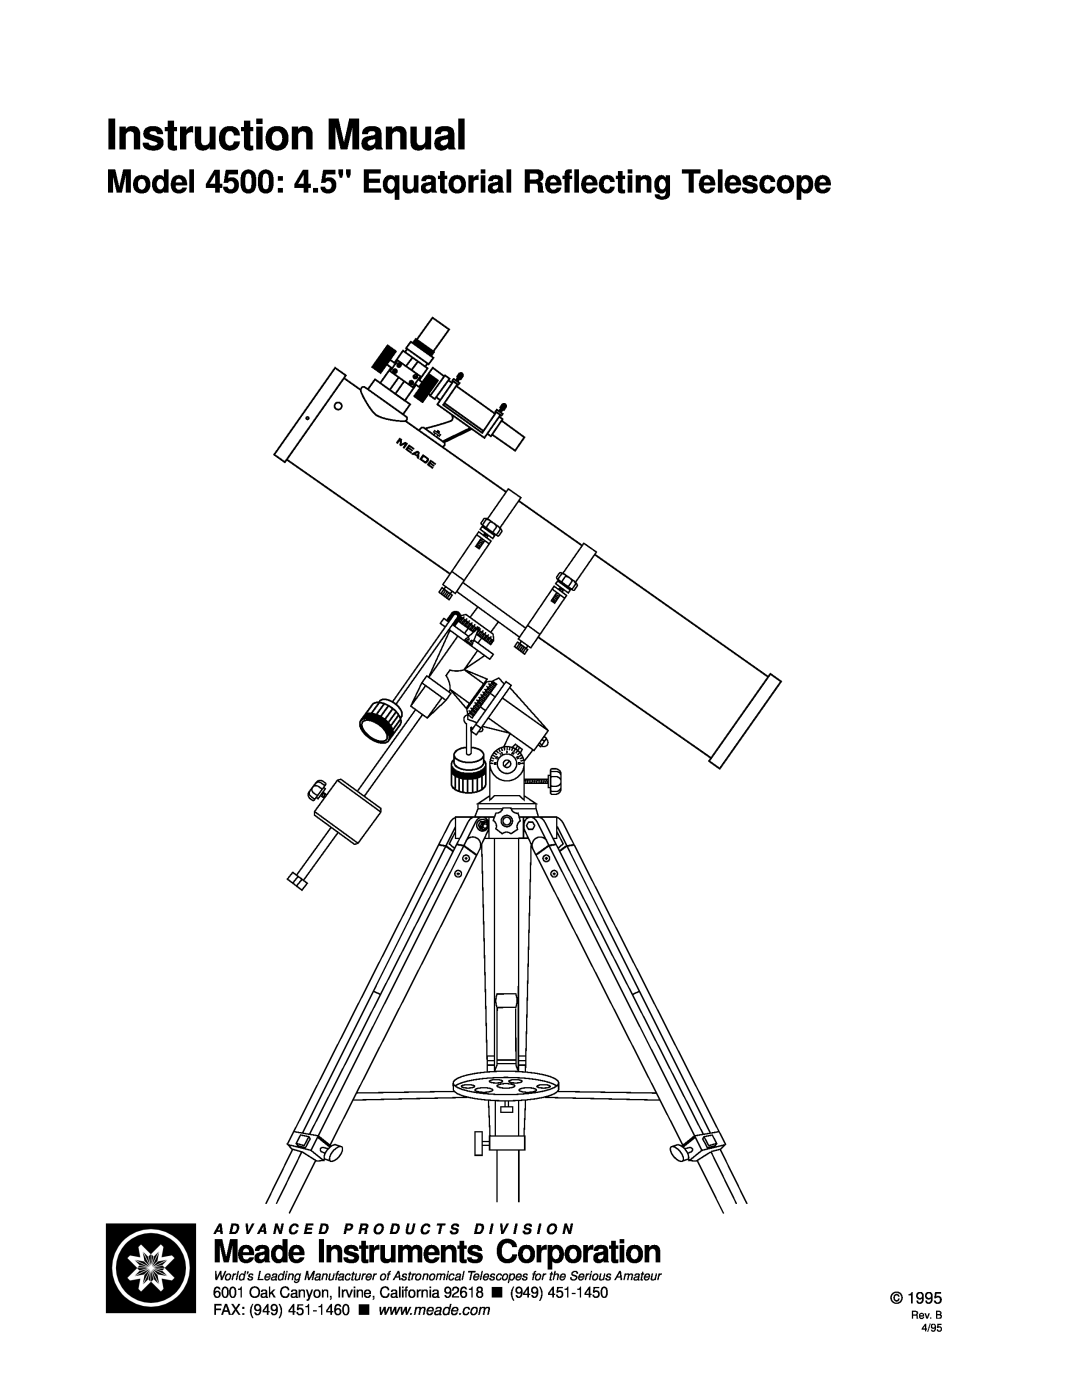 Meade instruction manual Model 4500 4.5 Equatorial Reflecting Telescope, Meade Instruments Corporation, Rev. B, 4/95 